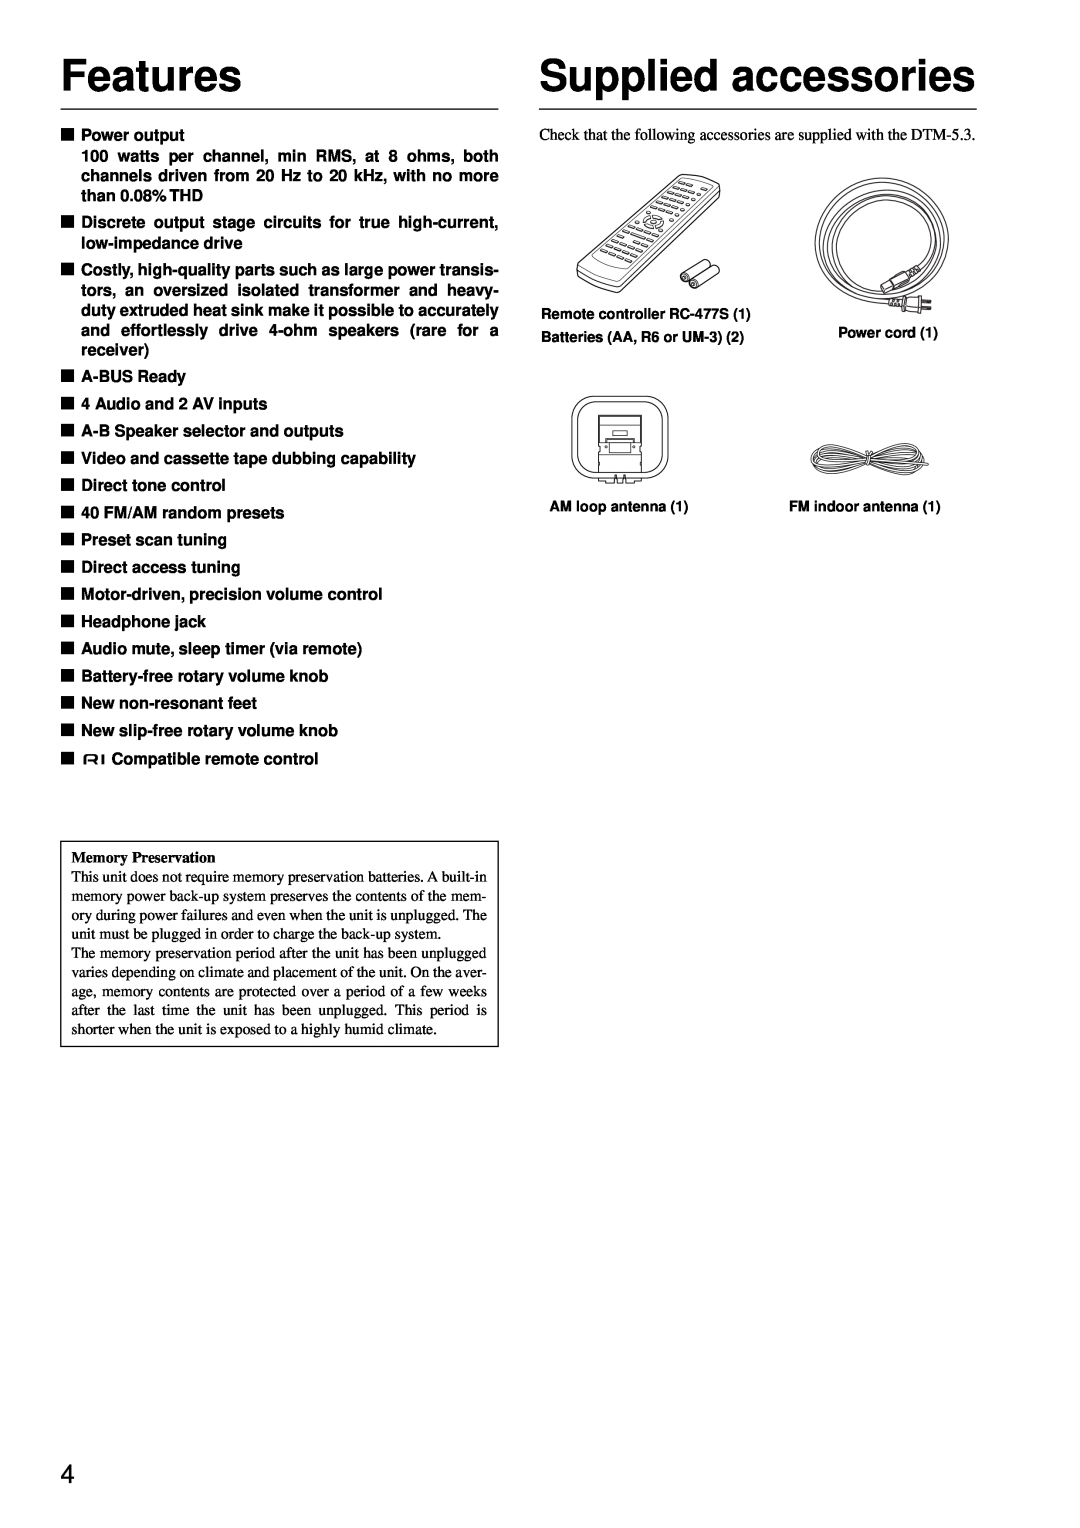 Integra DTM-5.3 appendix Features, Supplied accessories 